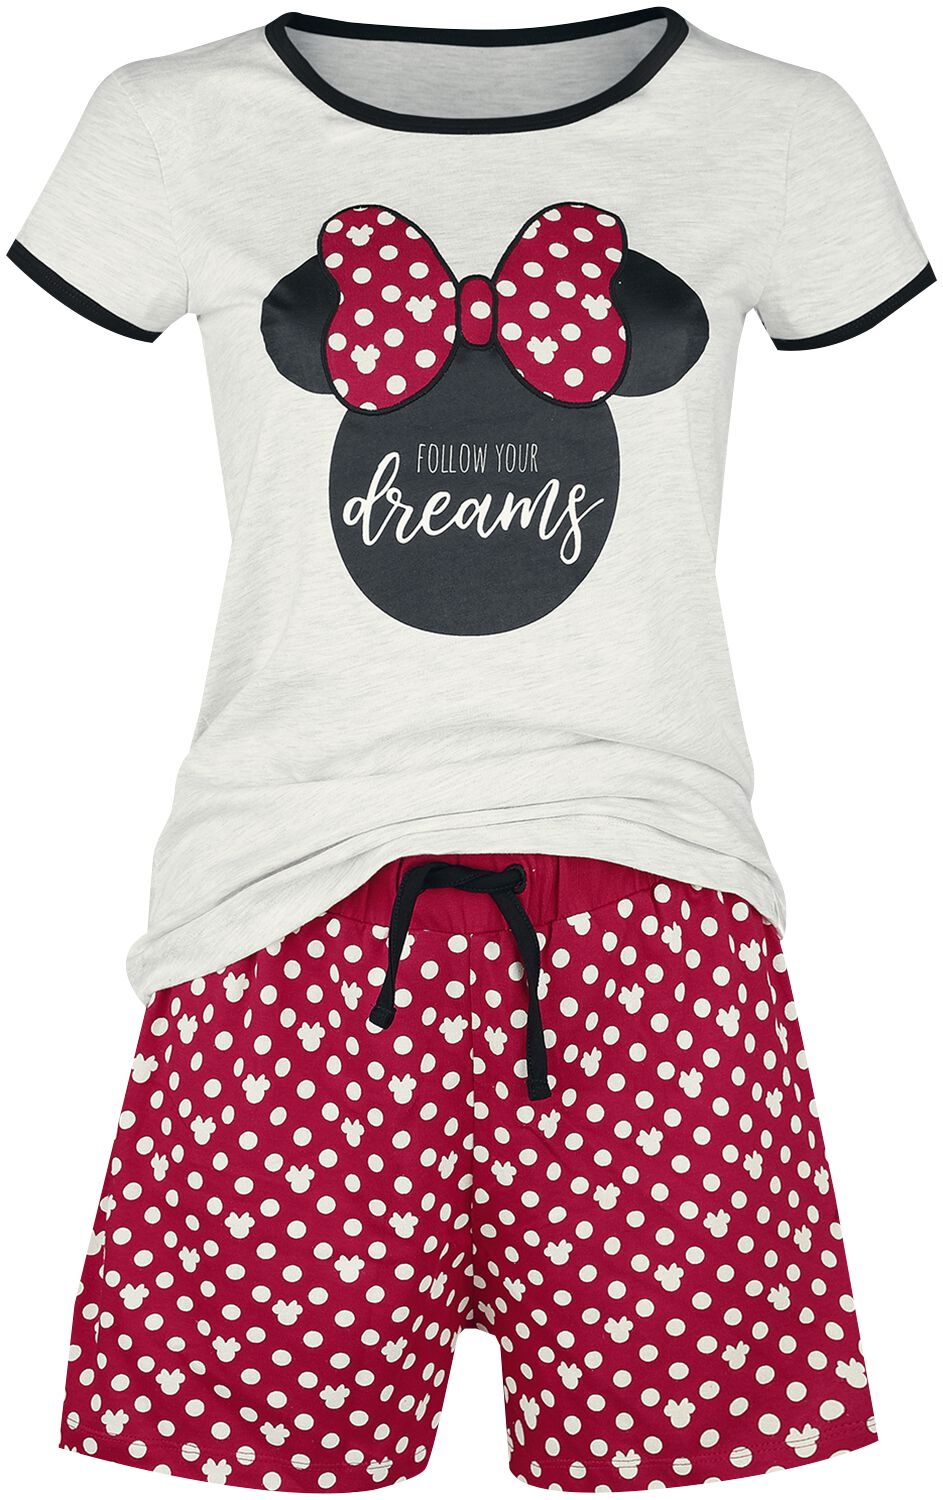 Pyjama Disney de Mickey & Minnie Mouse - Minnie Pois - S à XL - pour Femme - rouge/blanc